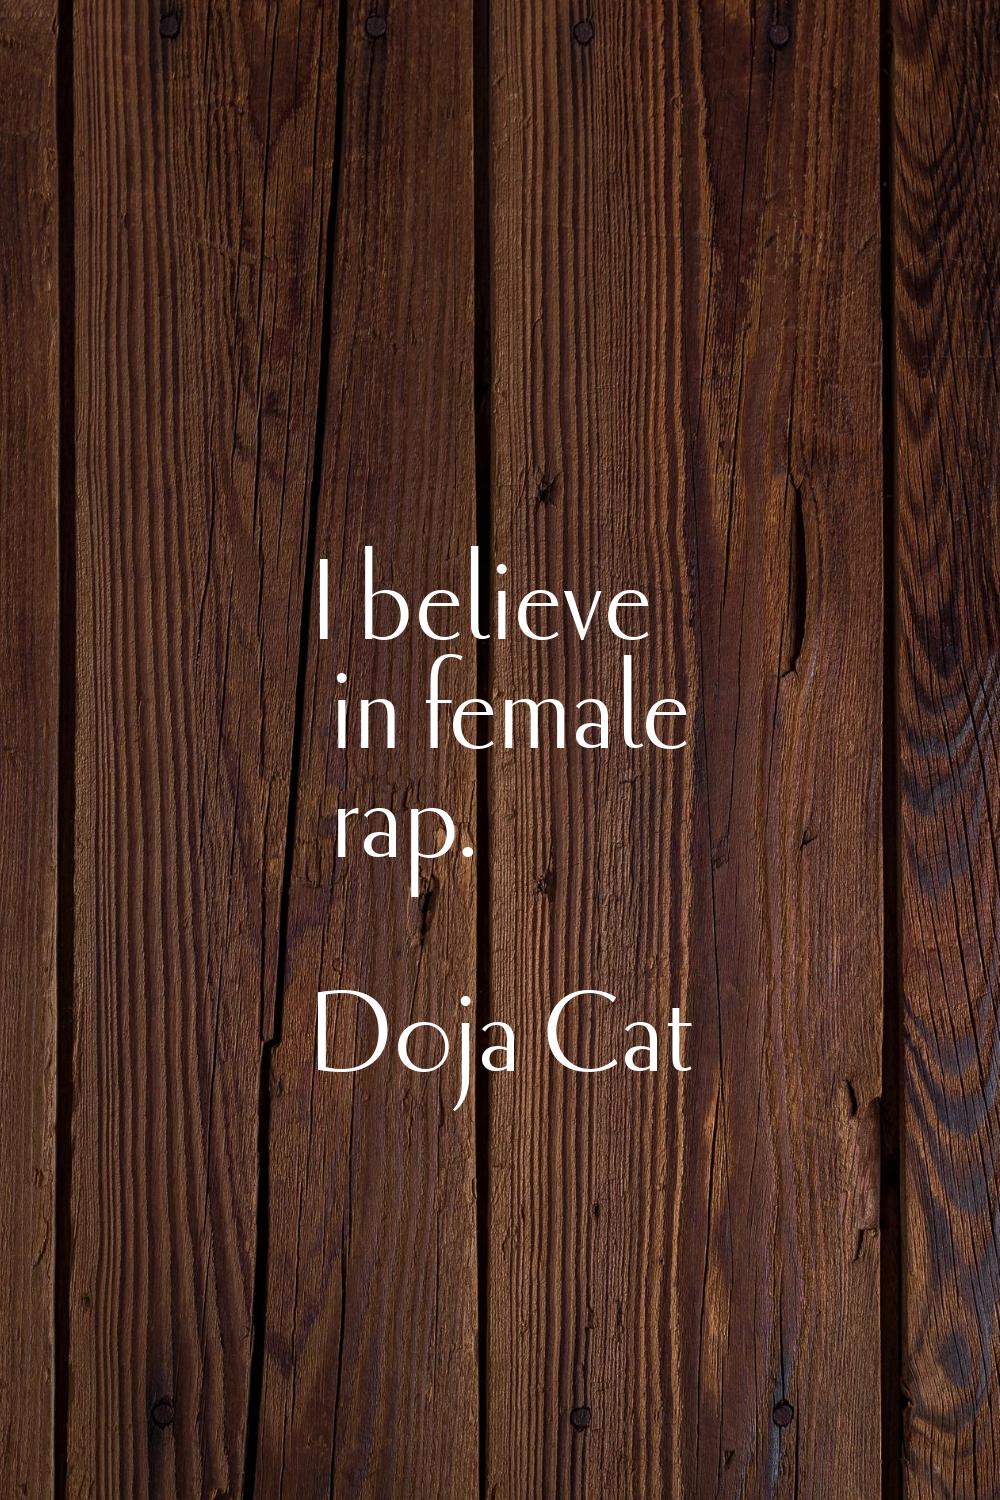 I believe in female rap.